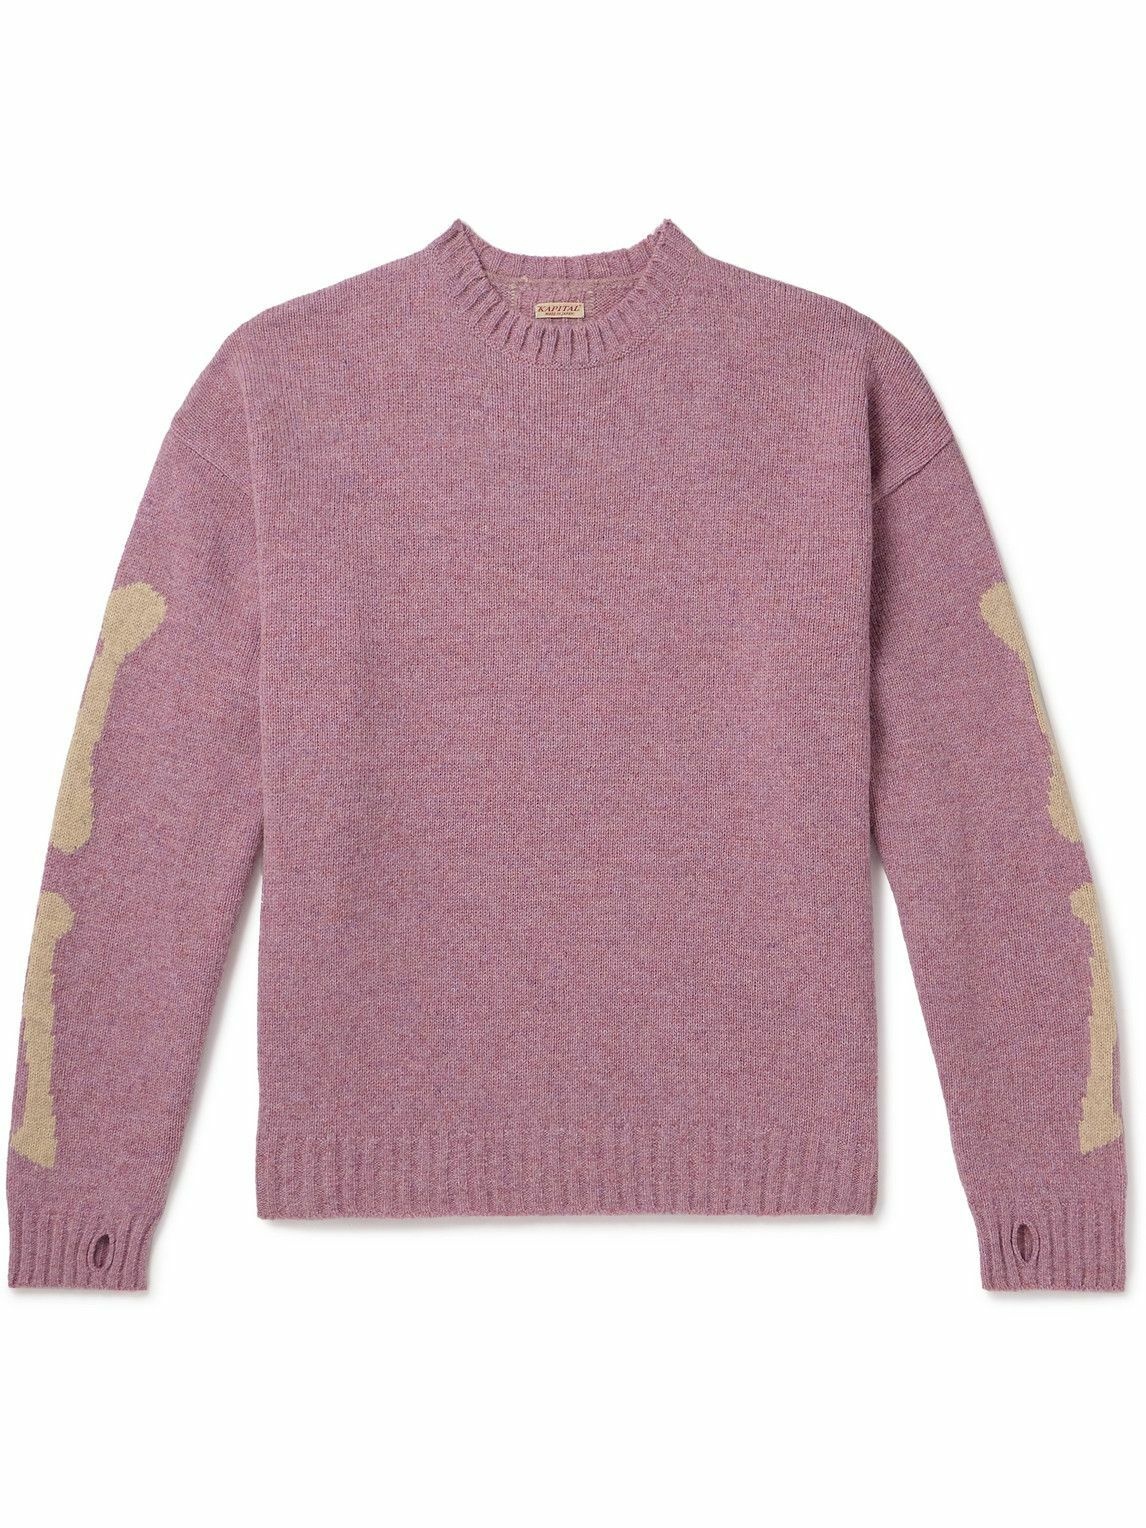 Photo: KAPITAL - 5G Intarsia Wool Sweater - Pink